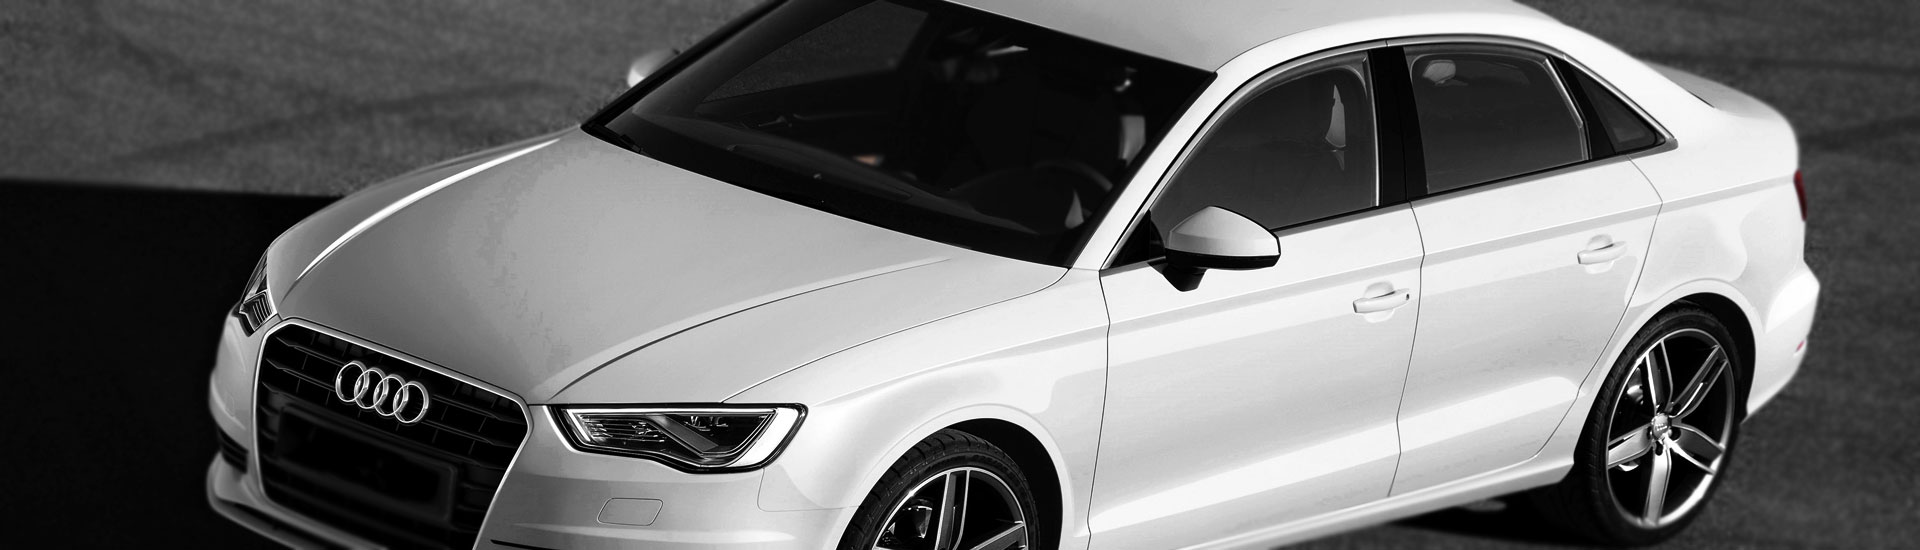 Audi A3 Window Tint